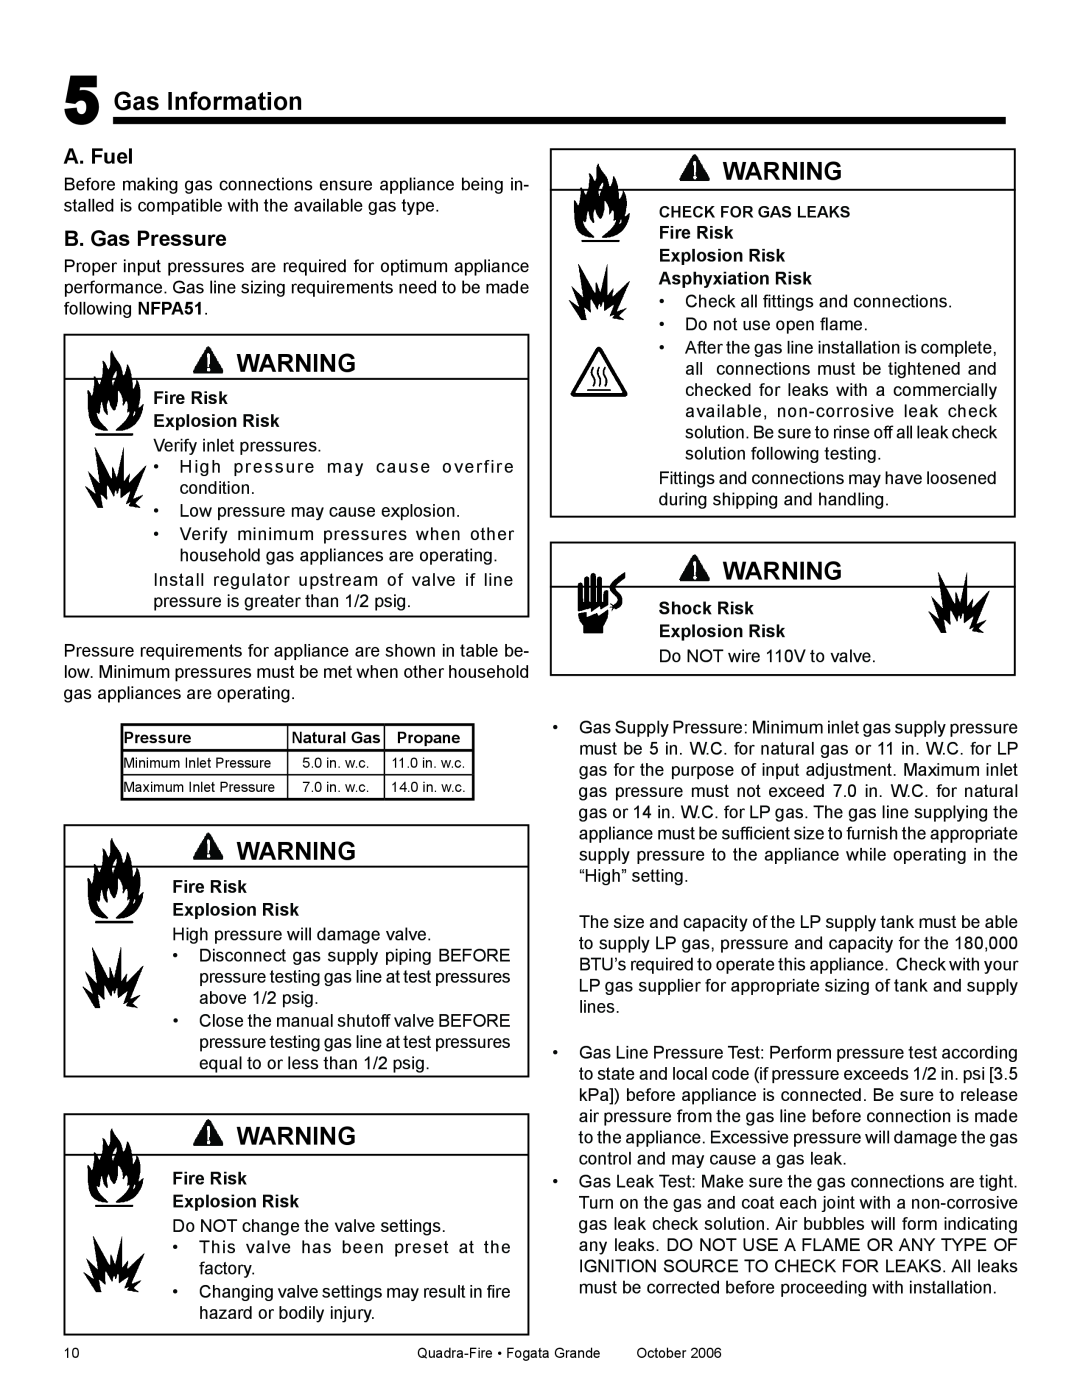 Quadra-Fire FG21SP-LP Gas Information, Fire Risk Explosion Risk Asphyxiation Risk, Shock Risk Explosion Risk 